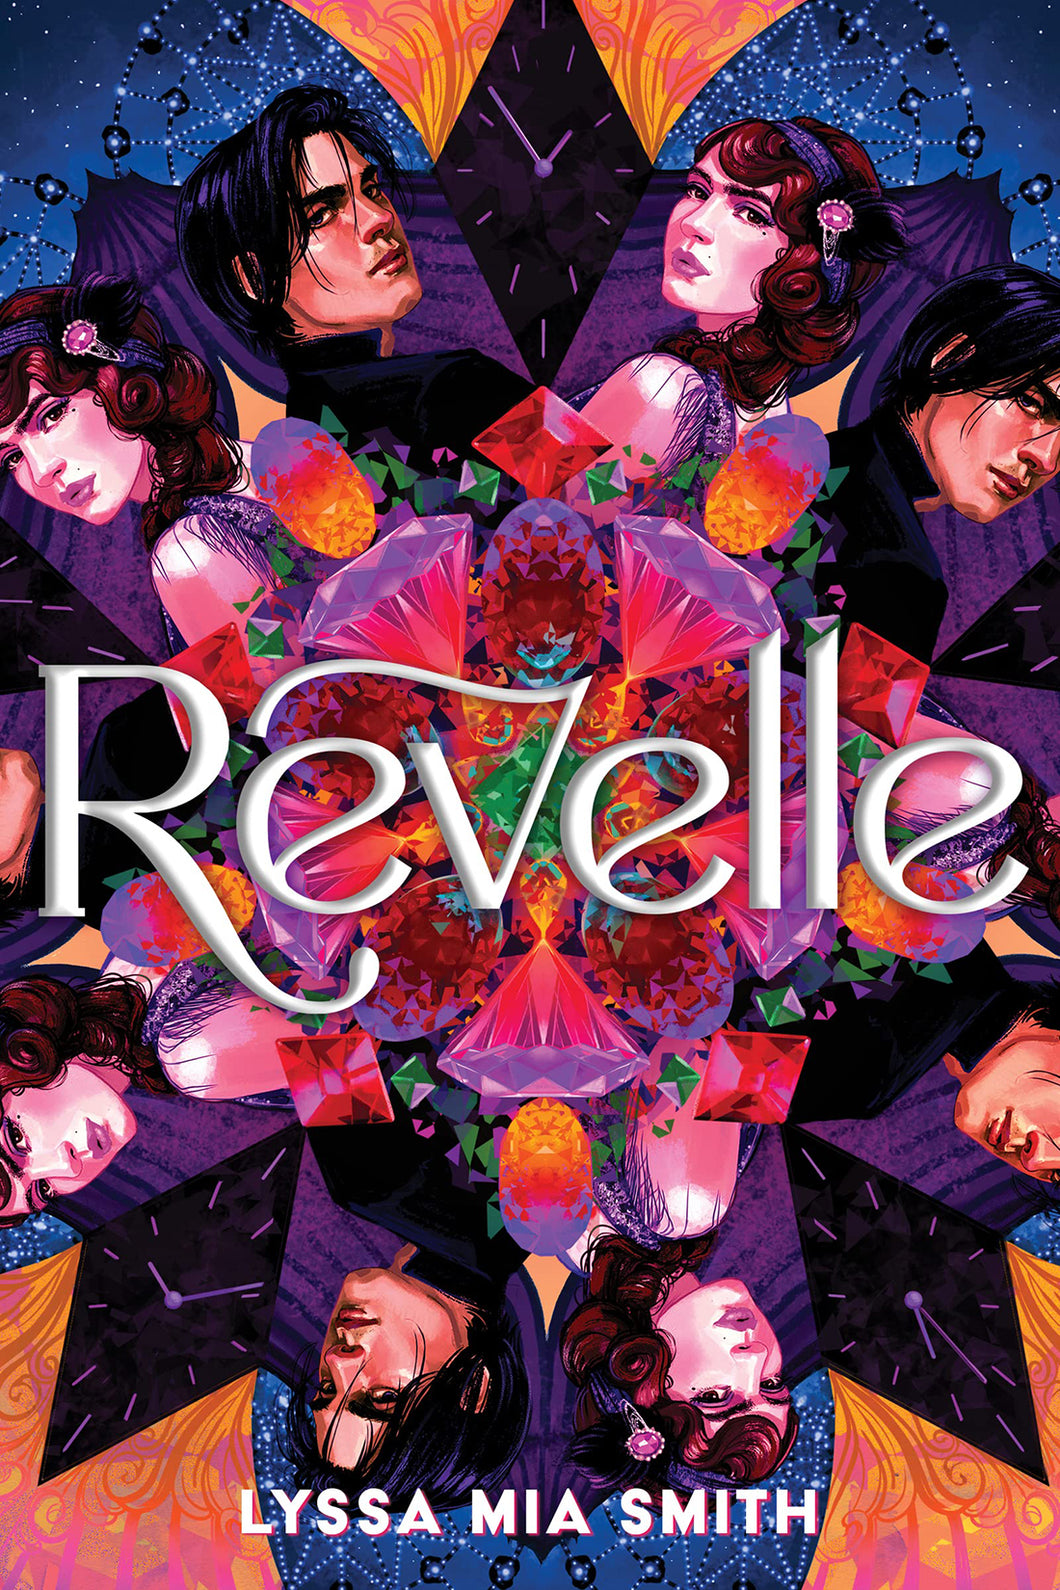 Revelle by Lyssa Mia Smith / Hardcover - NEW BOOK